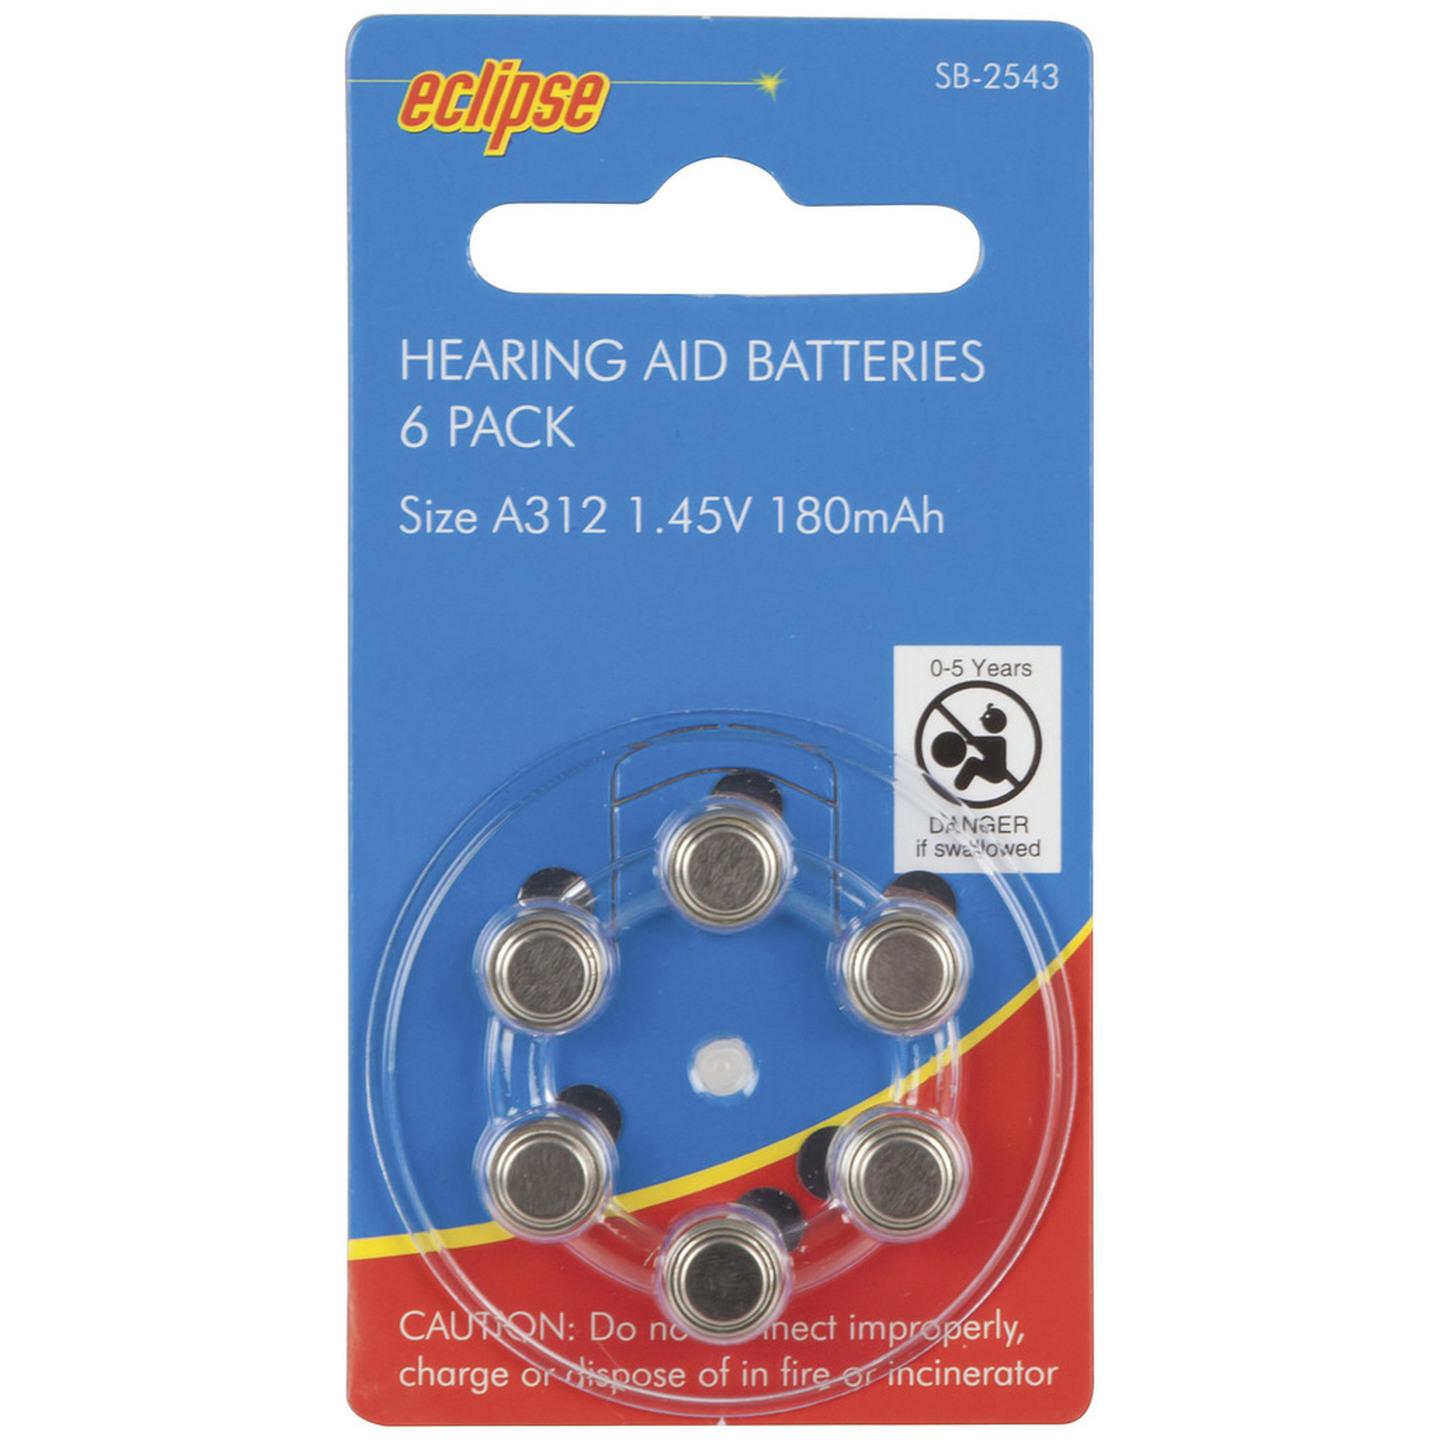 Hearing Aid Batteries A312 180mAh 6 pack